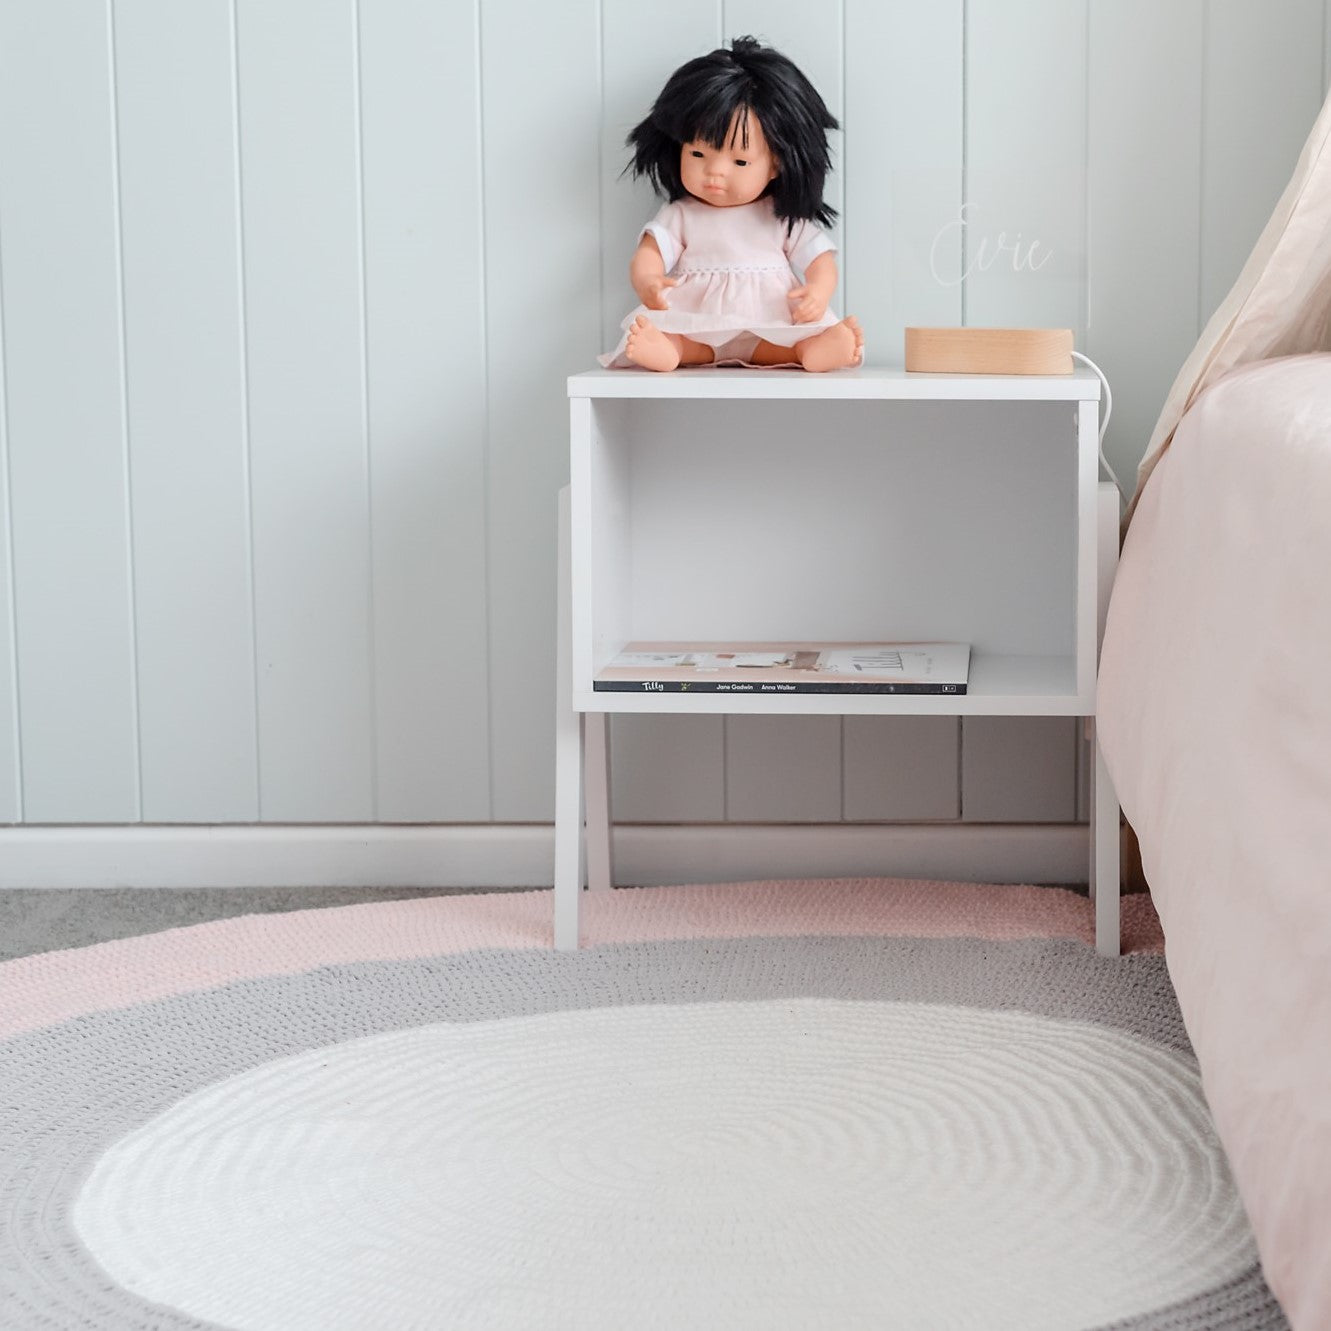 Nursery Round Crochet Rug - Blush Pink, Grey + White